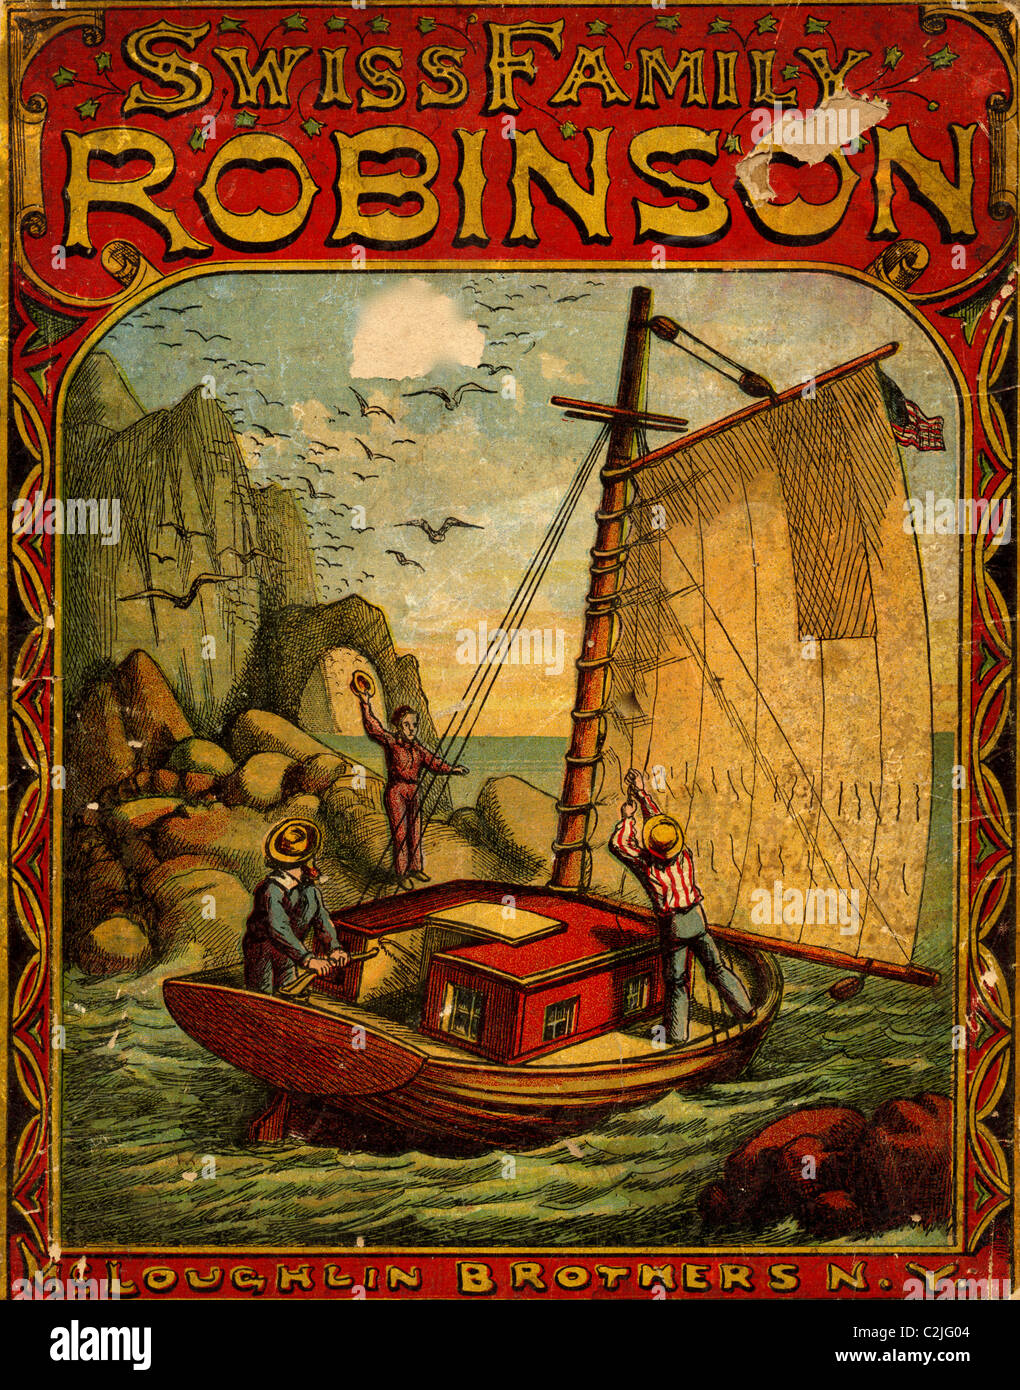 Schweizer Familie Robinson-Buch-Cover Stockfoto